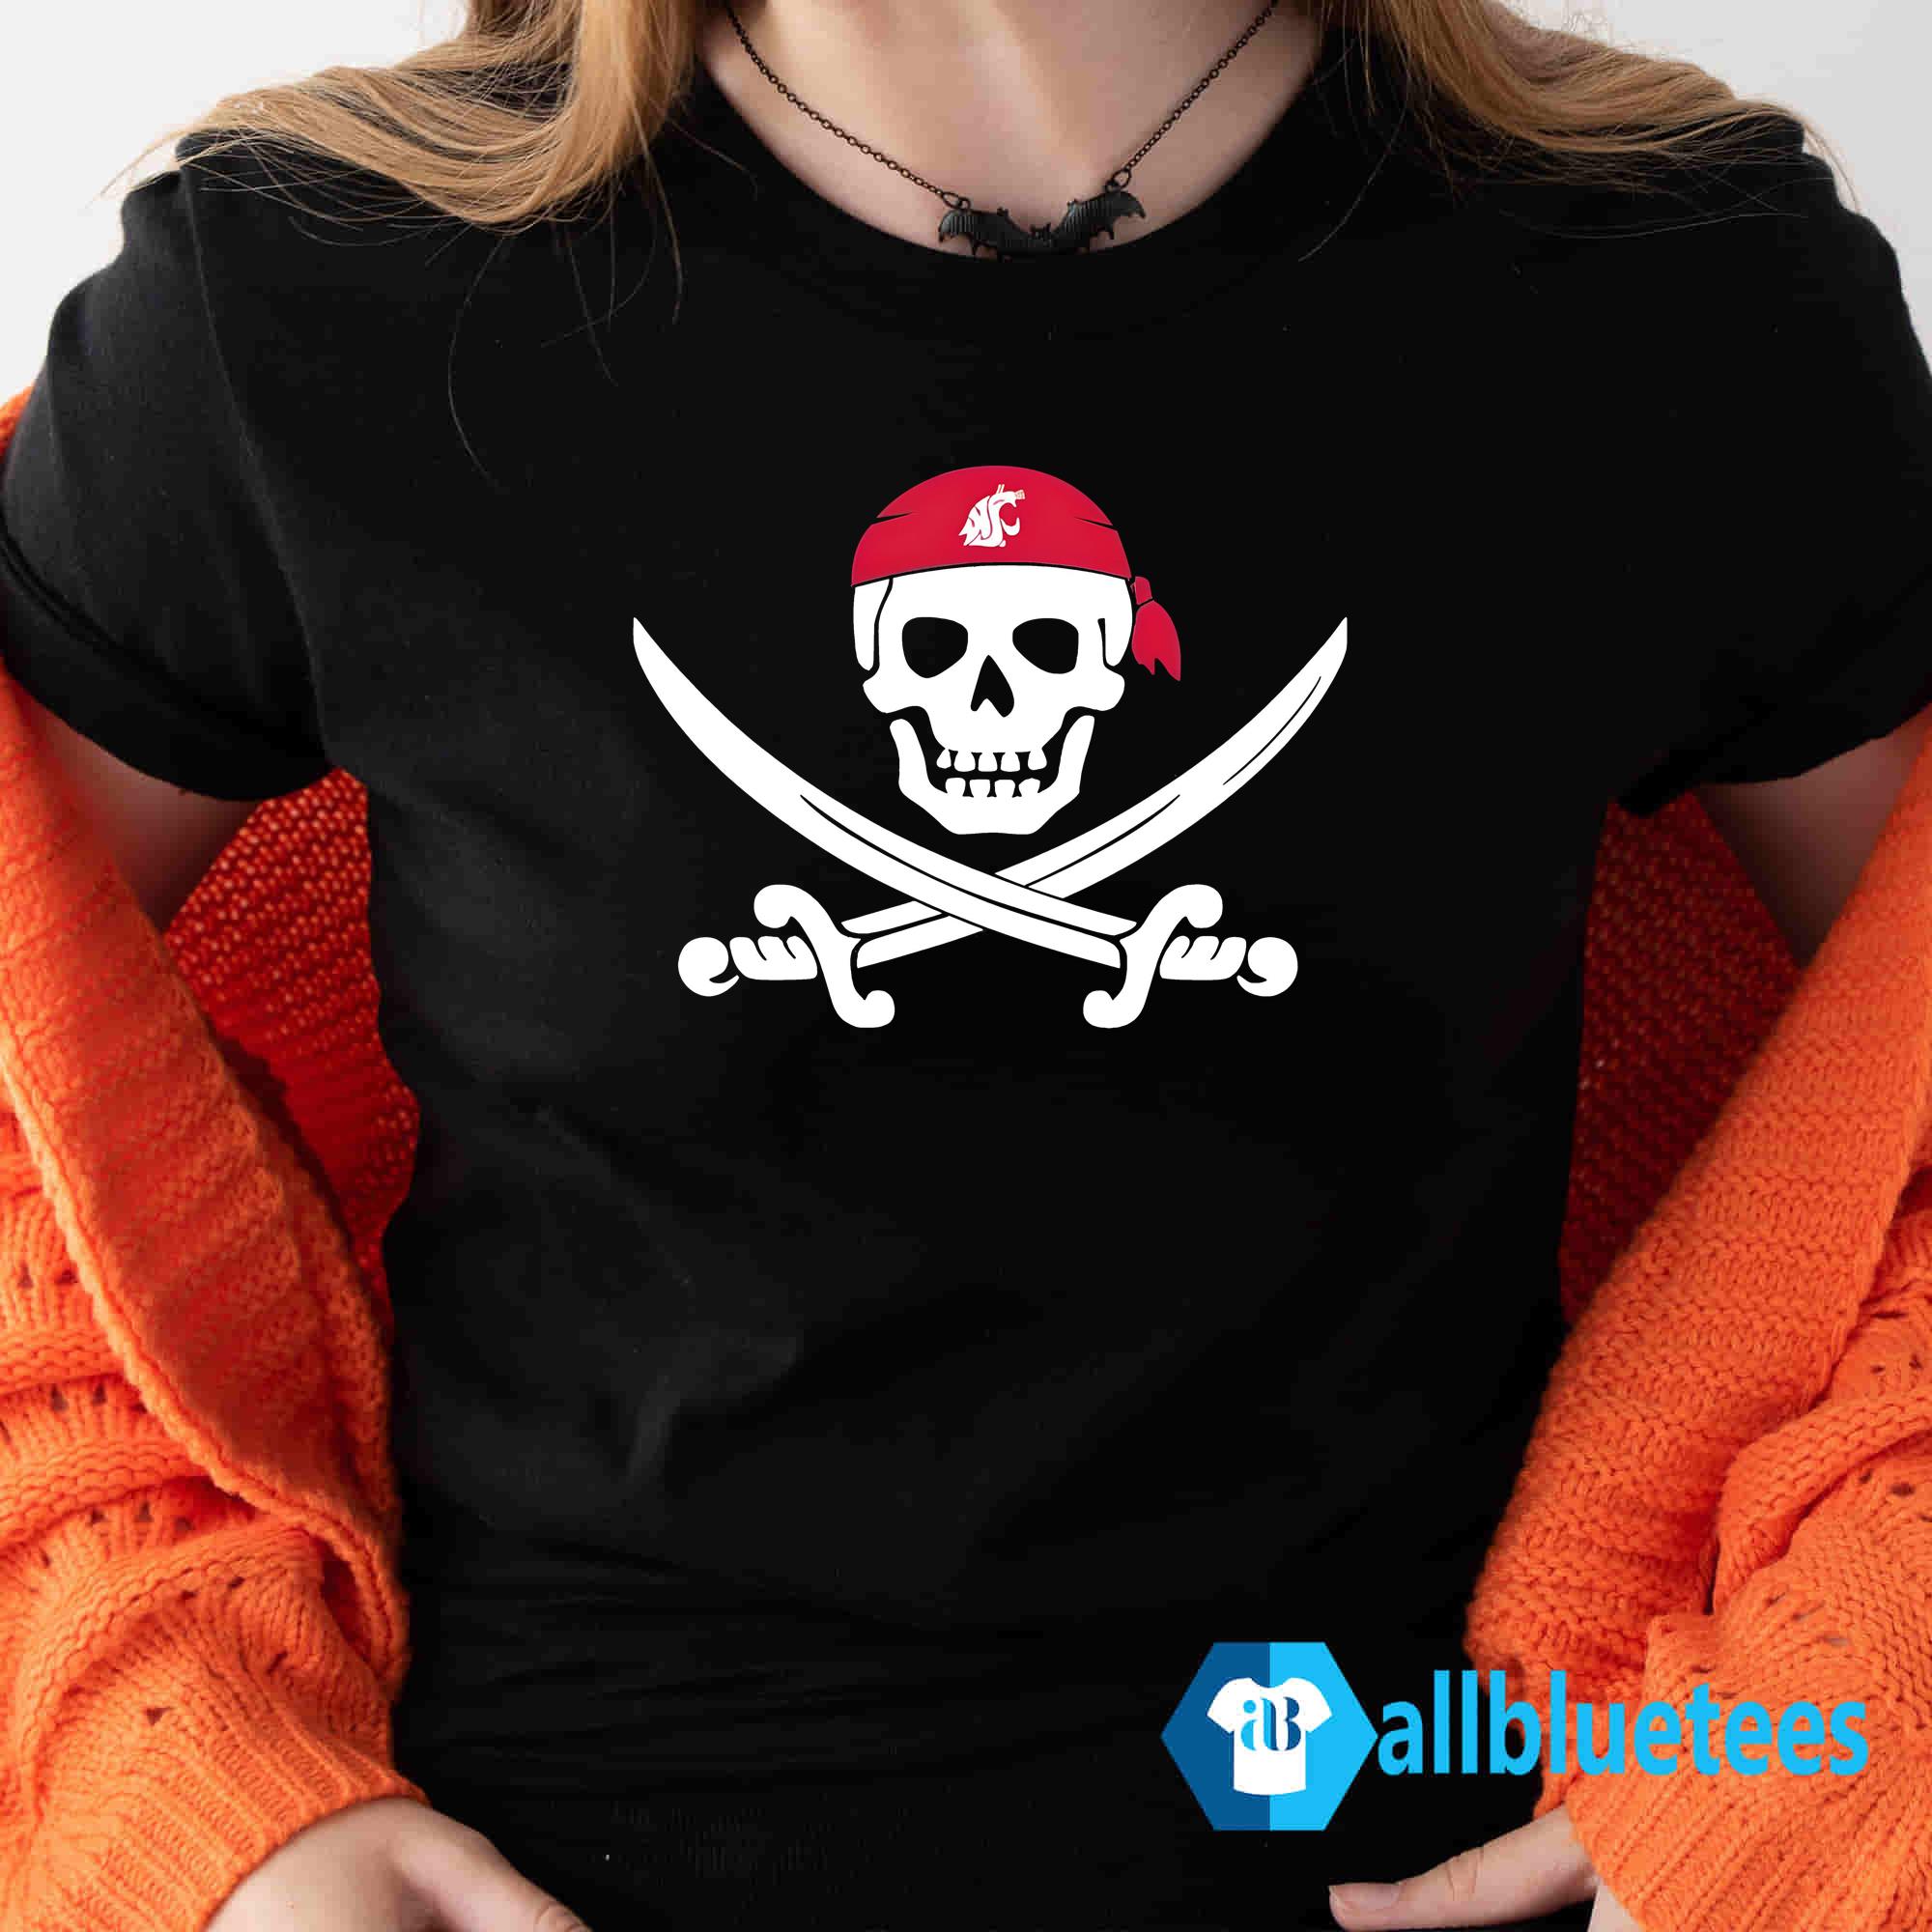 Washington State Pirate T-Shirt